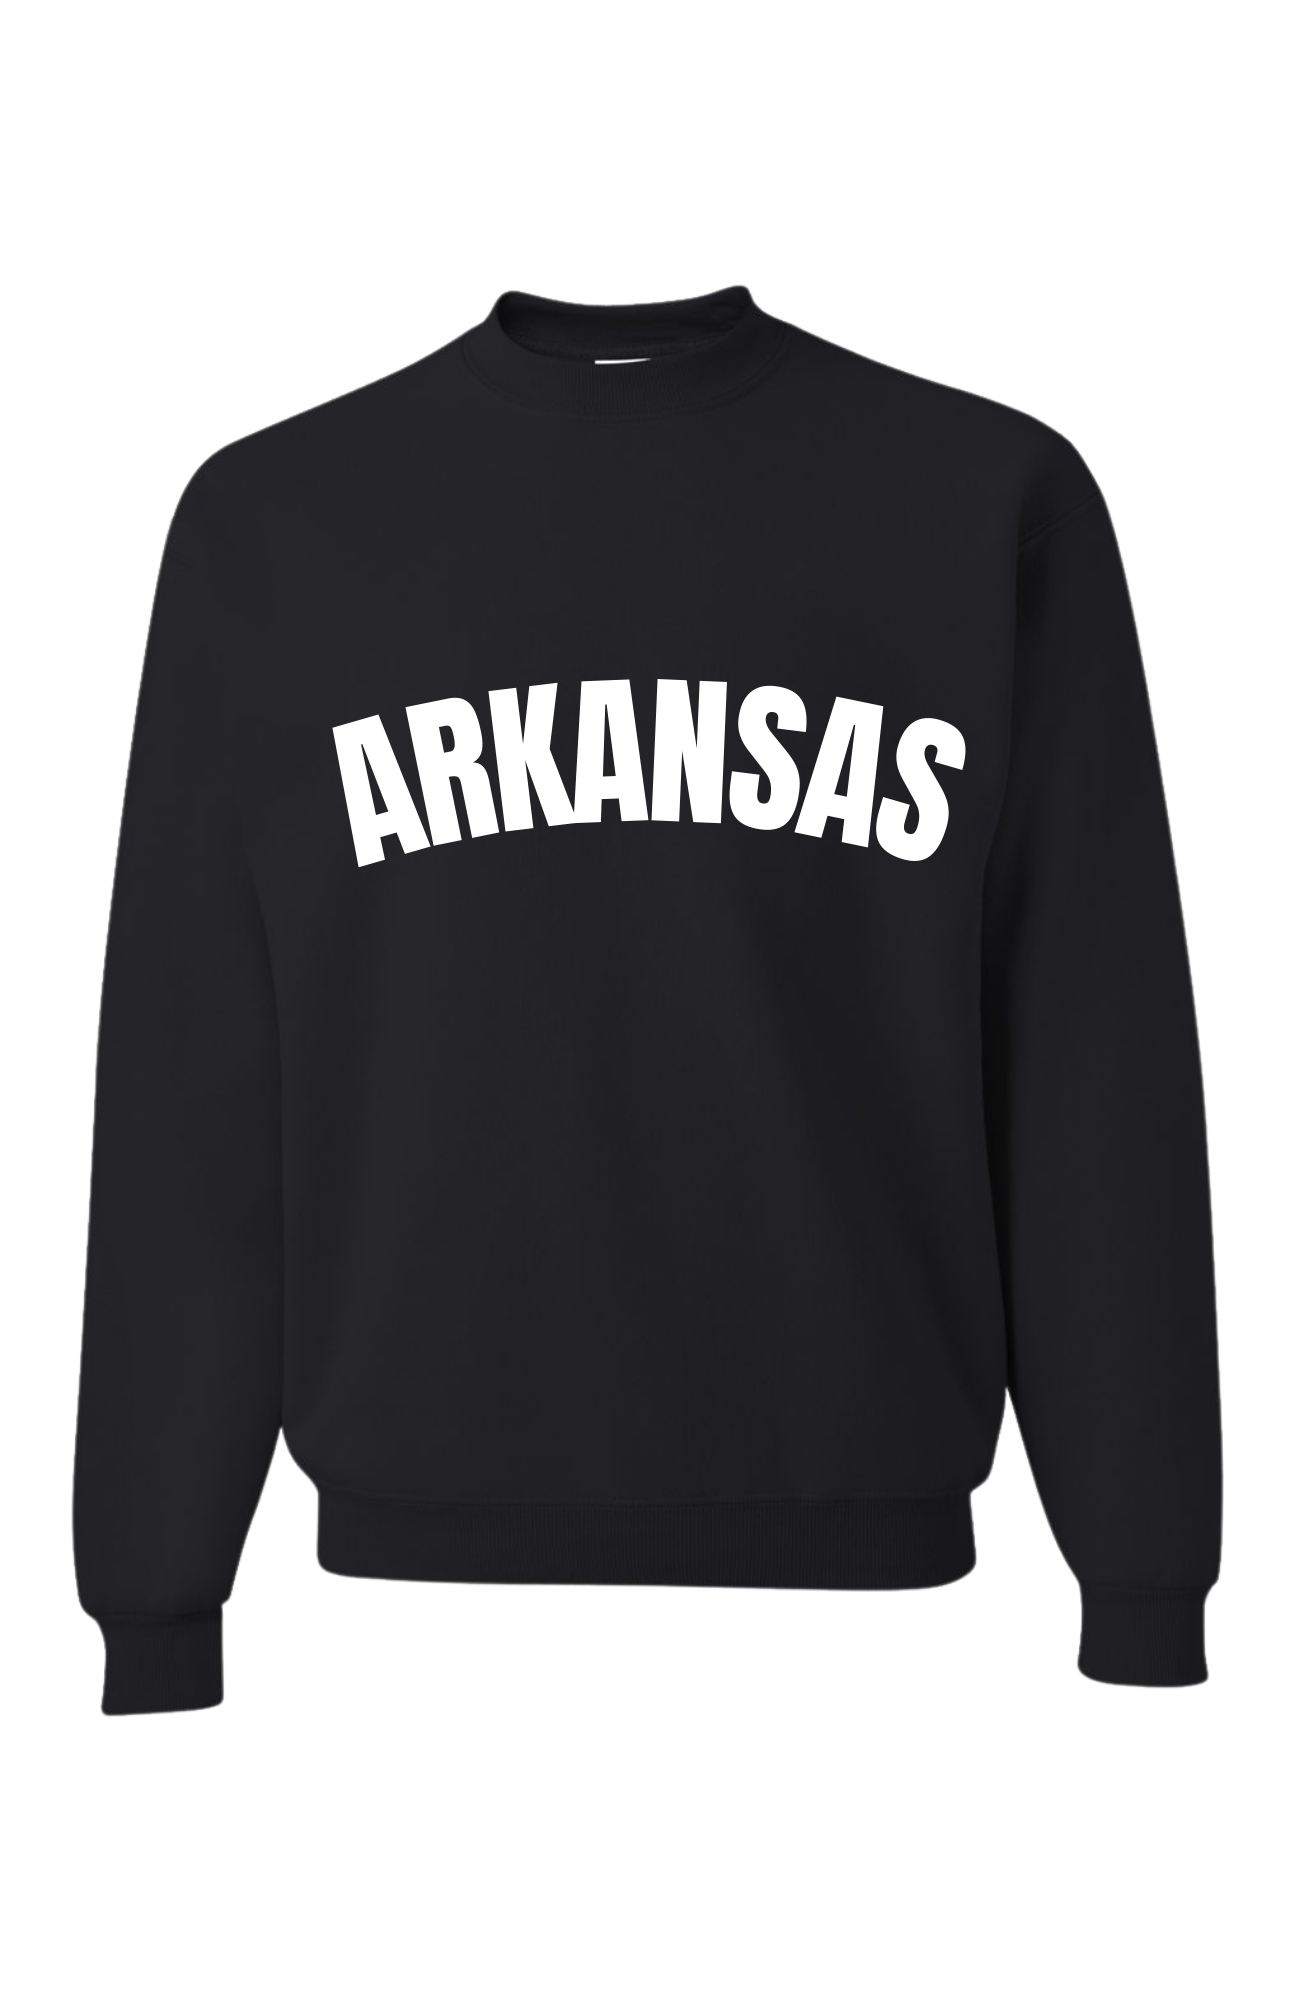 Arkansas Crewneck (Black)